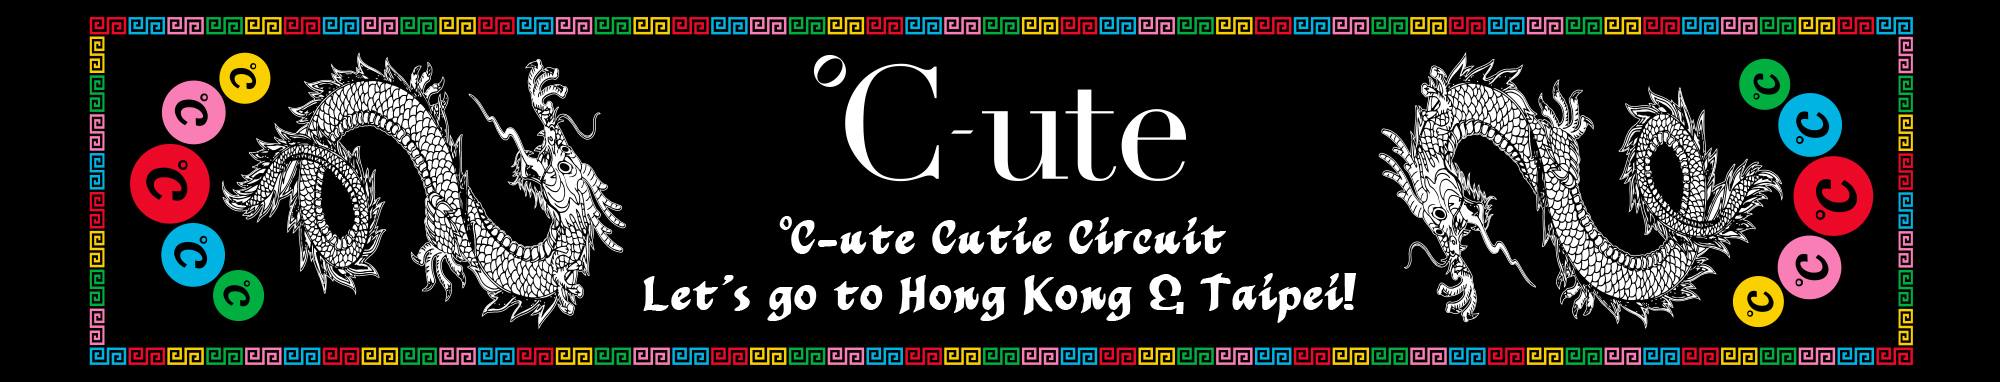 °C-ute Cutie Circuit ~Let's go to Hong Kong & Taipei~ Ciz1yBpUoAAHVlp